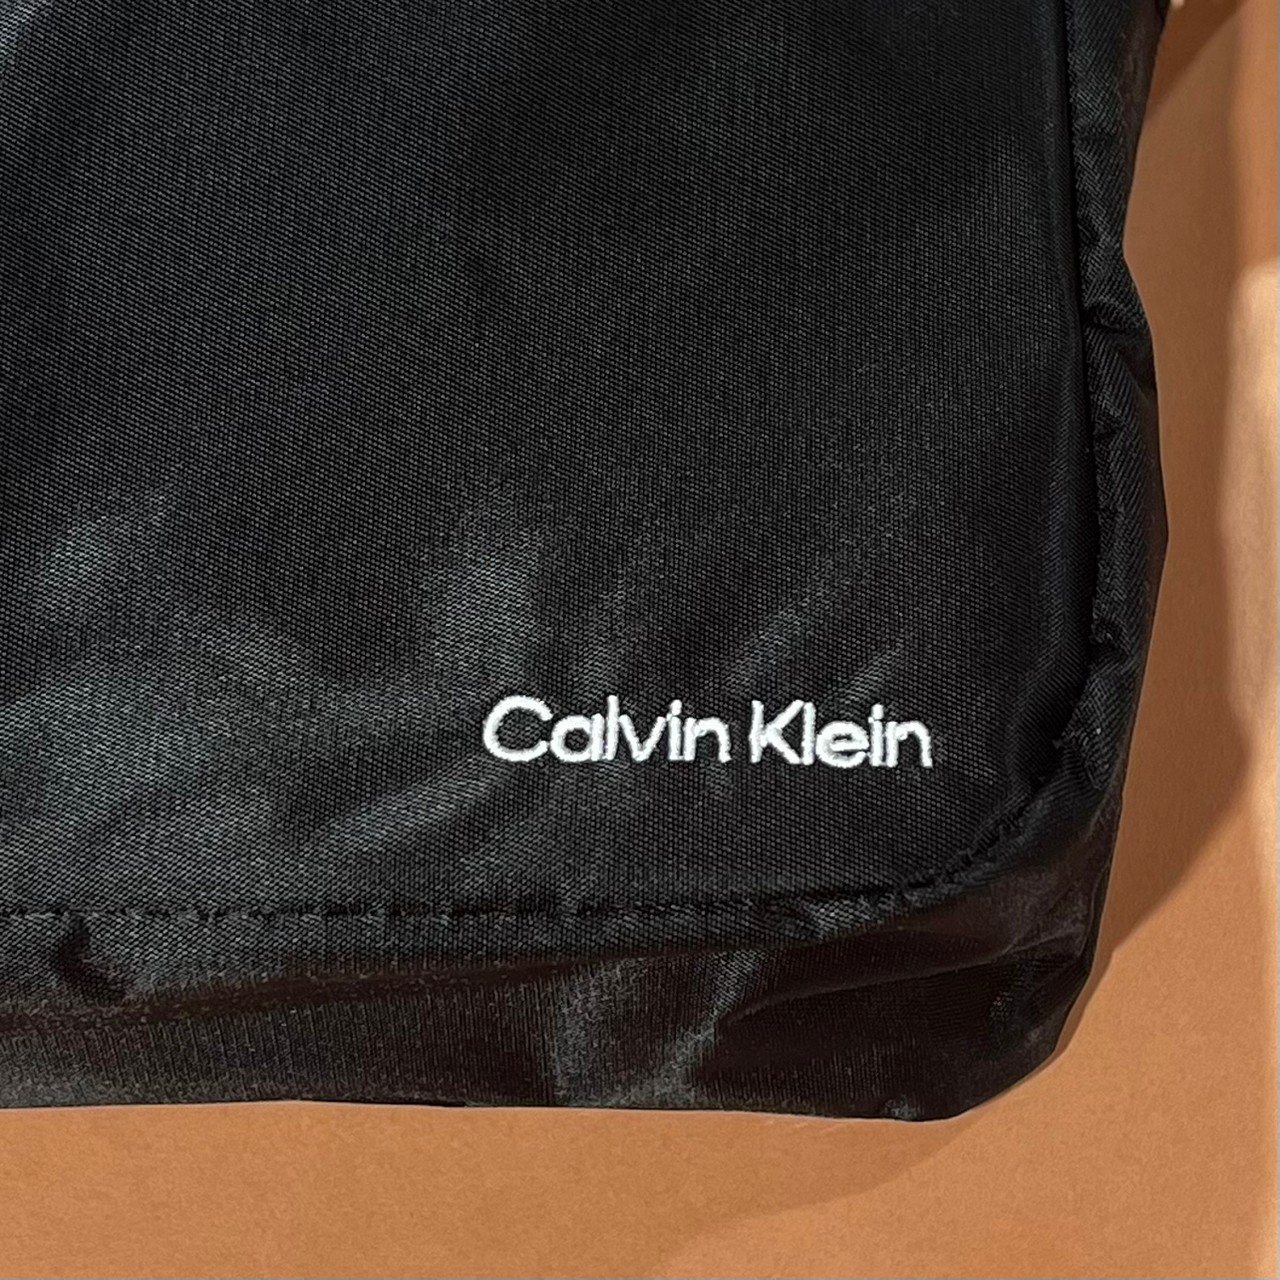 Calvin Kleinのショルダーのフロントにある刺繍ロゴ